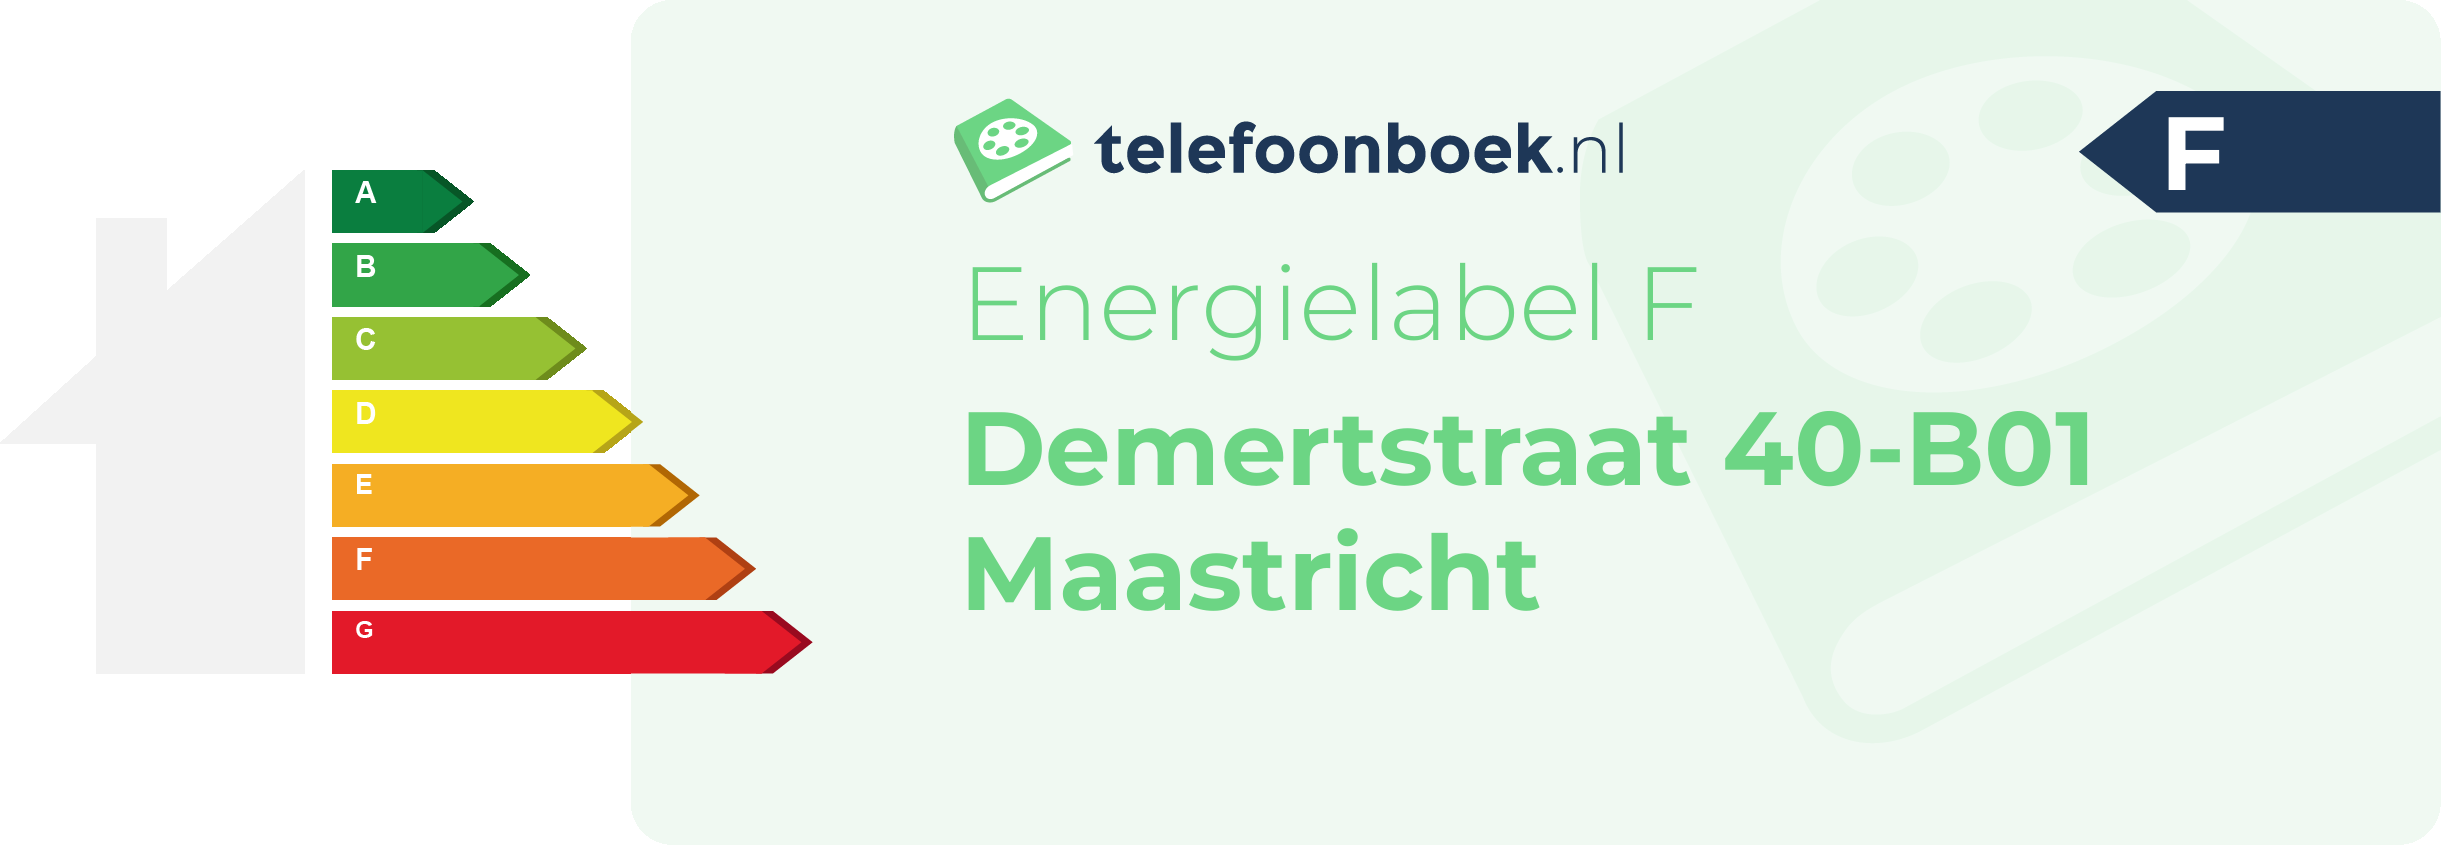 Energielabel Demertstraat 40-B01 Maastricht